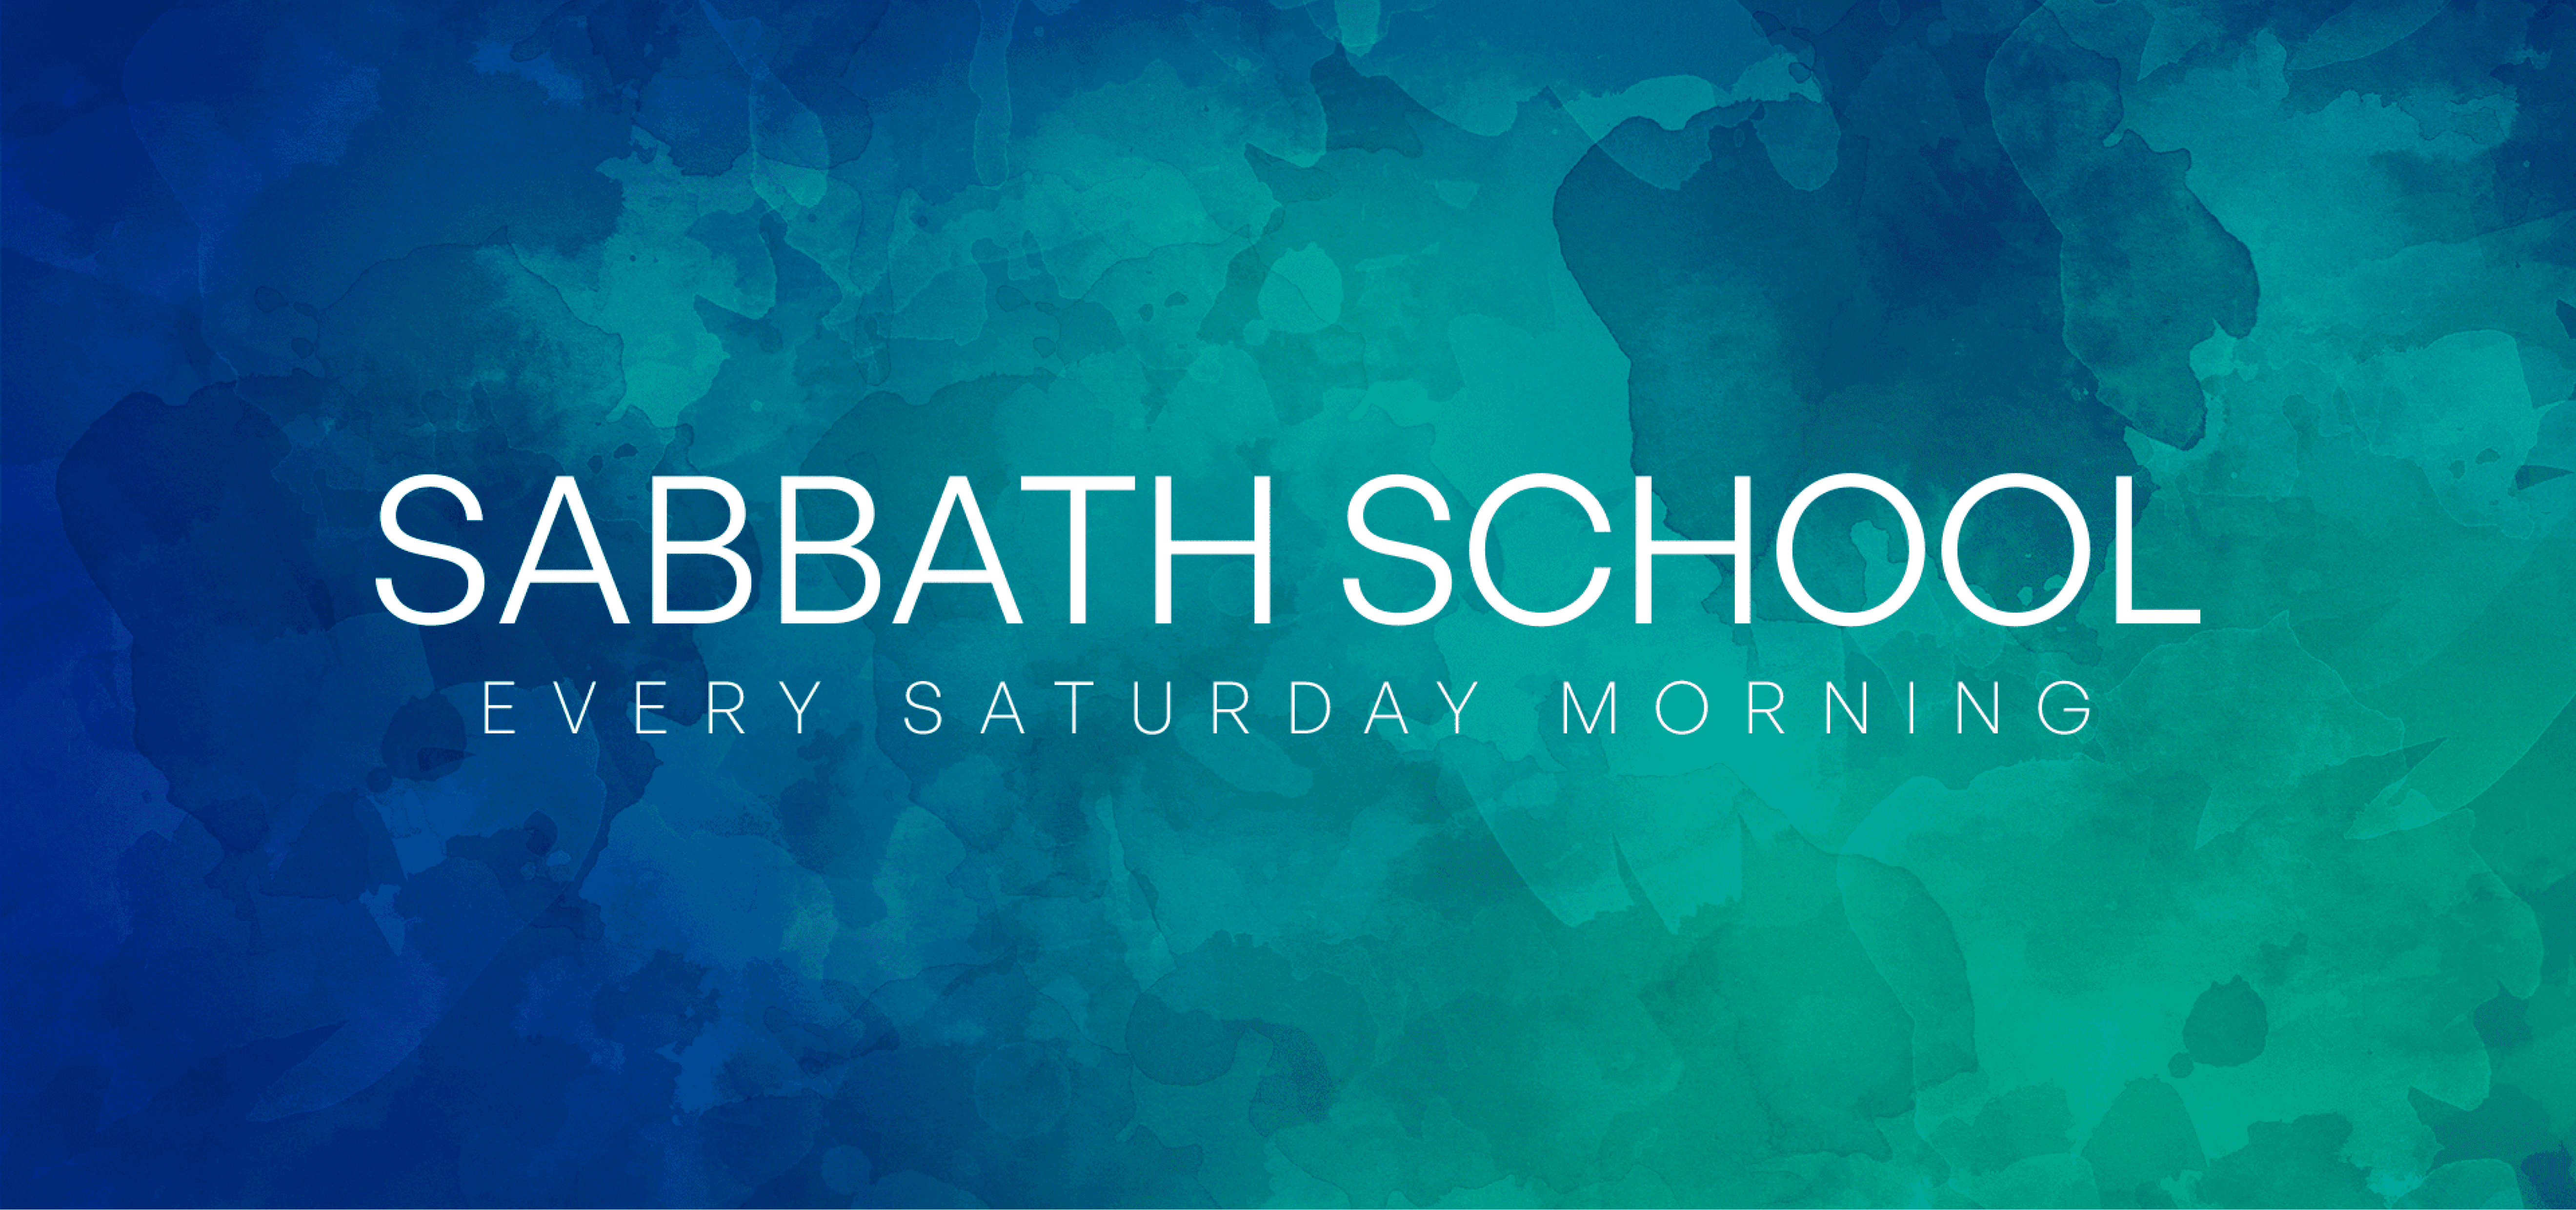 green-blue background with sabbath school text